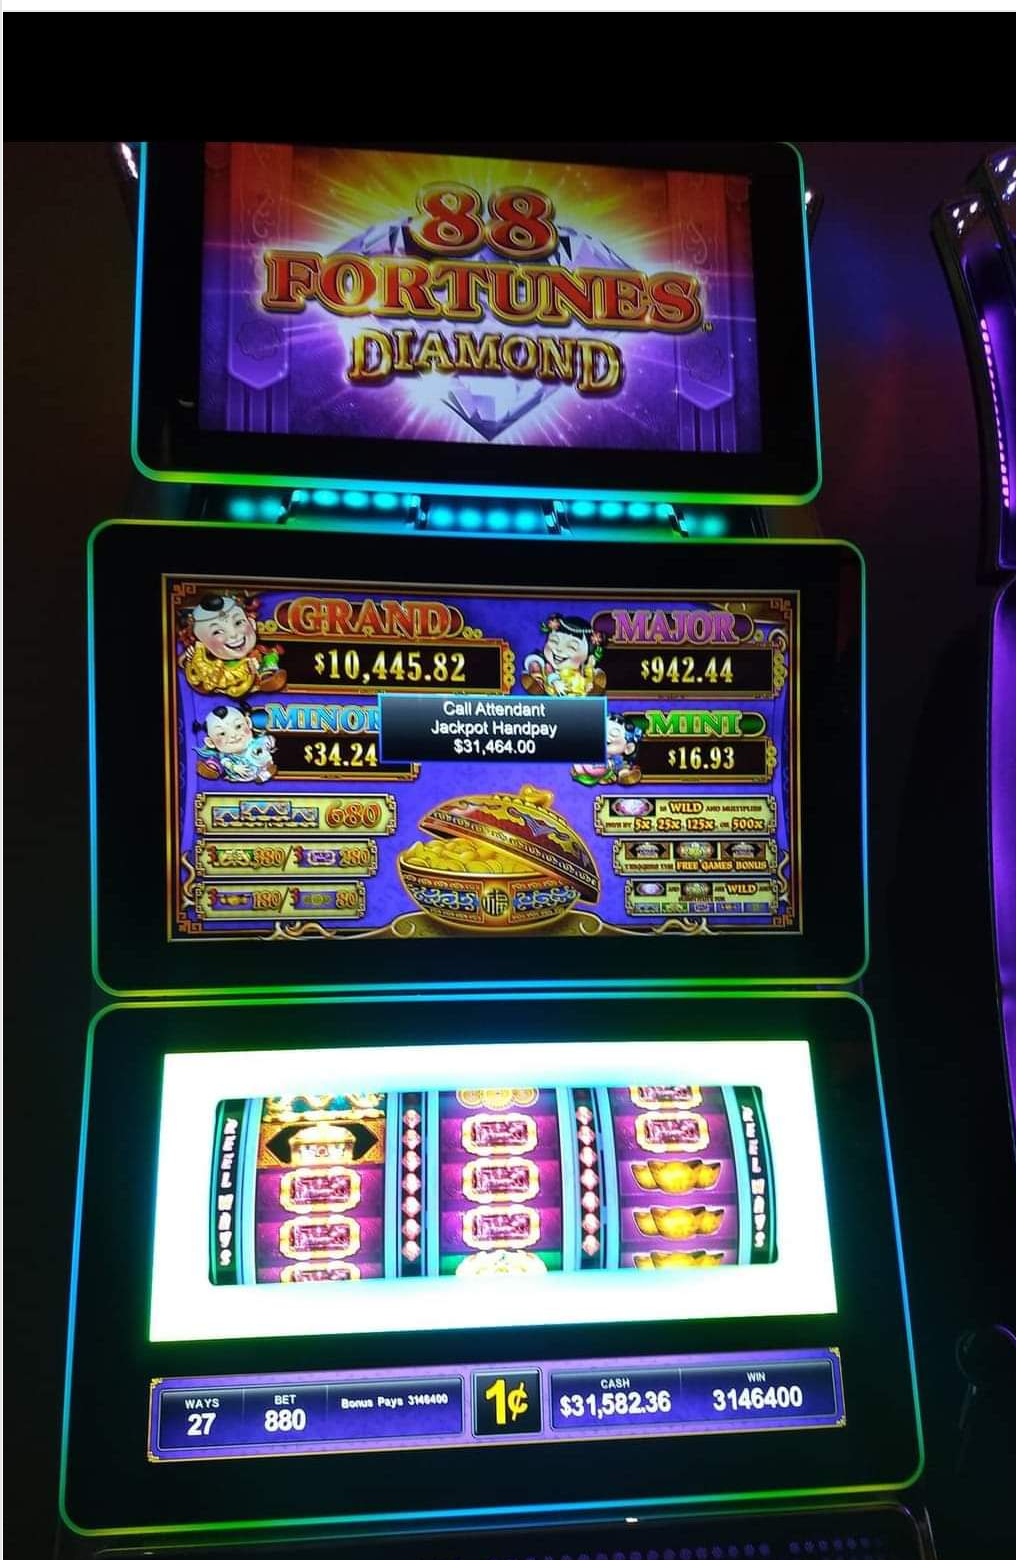 How Many Slot Machines Does Winstar Casino Have?